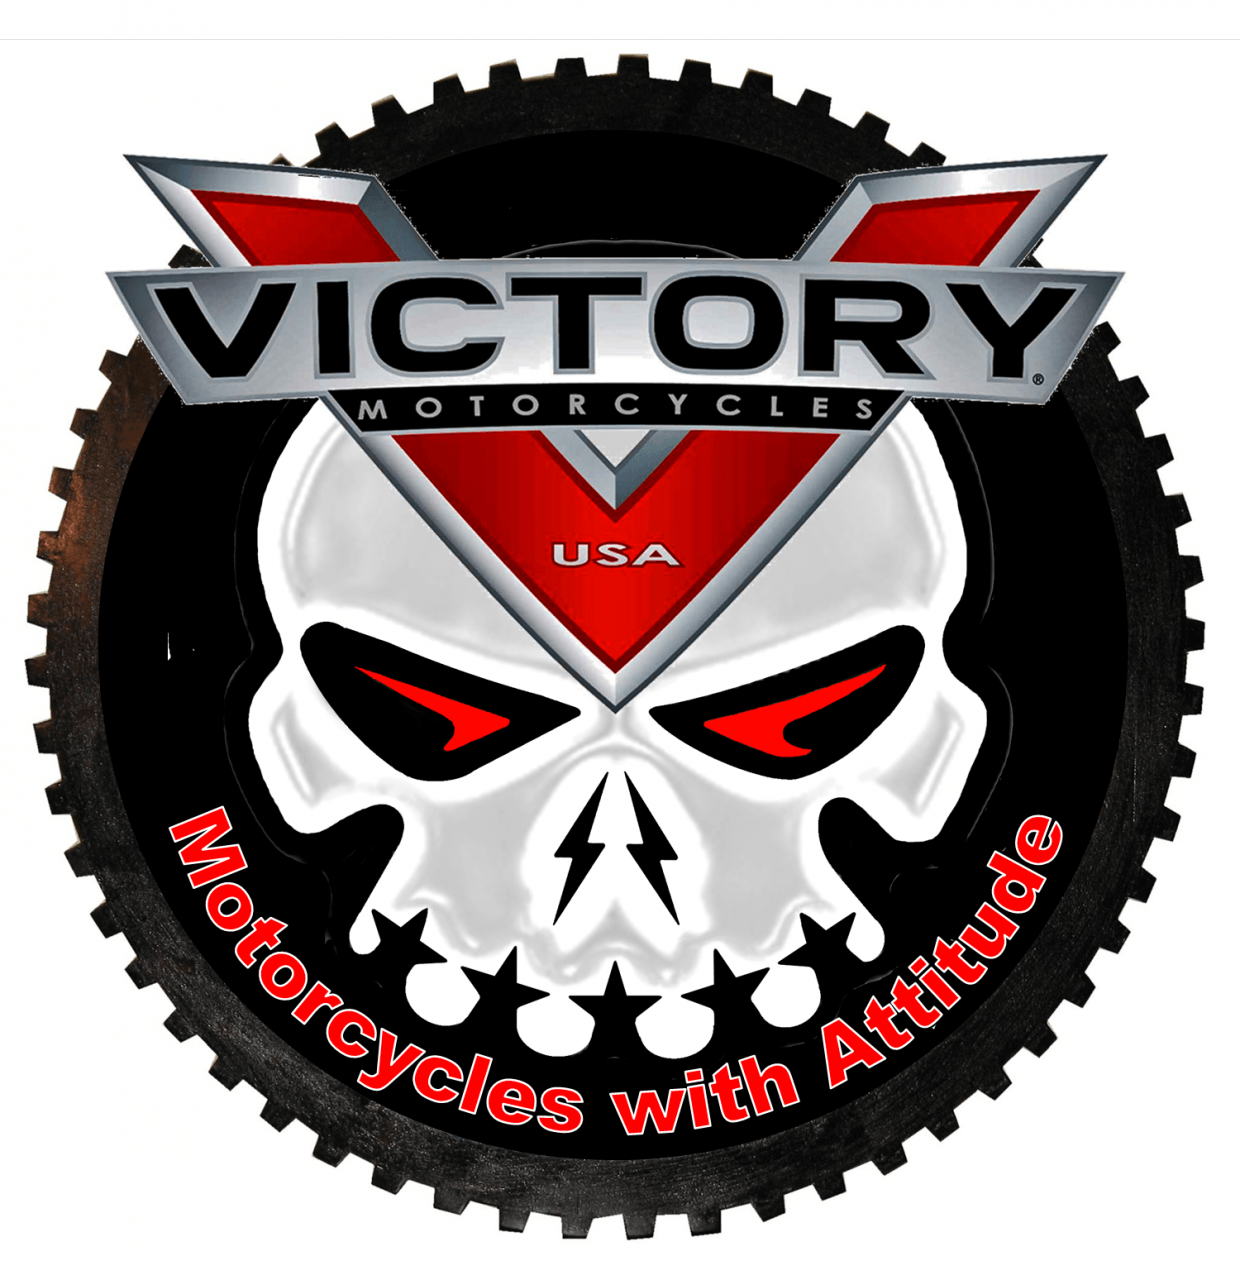 Motorcycle Skull Logo - Photo Skull, Logo, Gear and Attitude in the album Victory